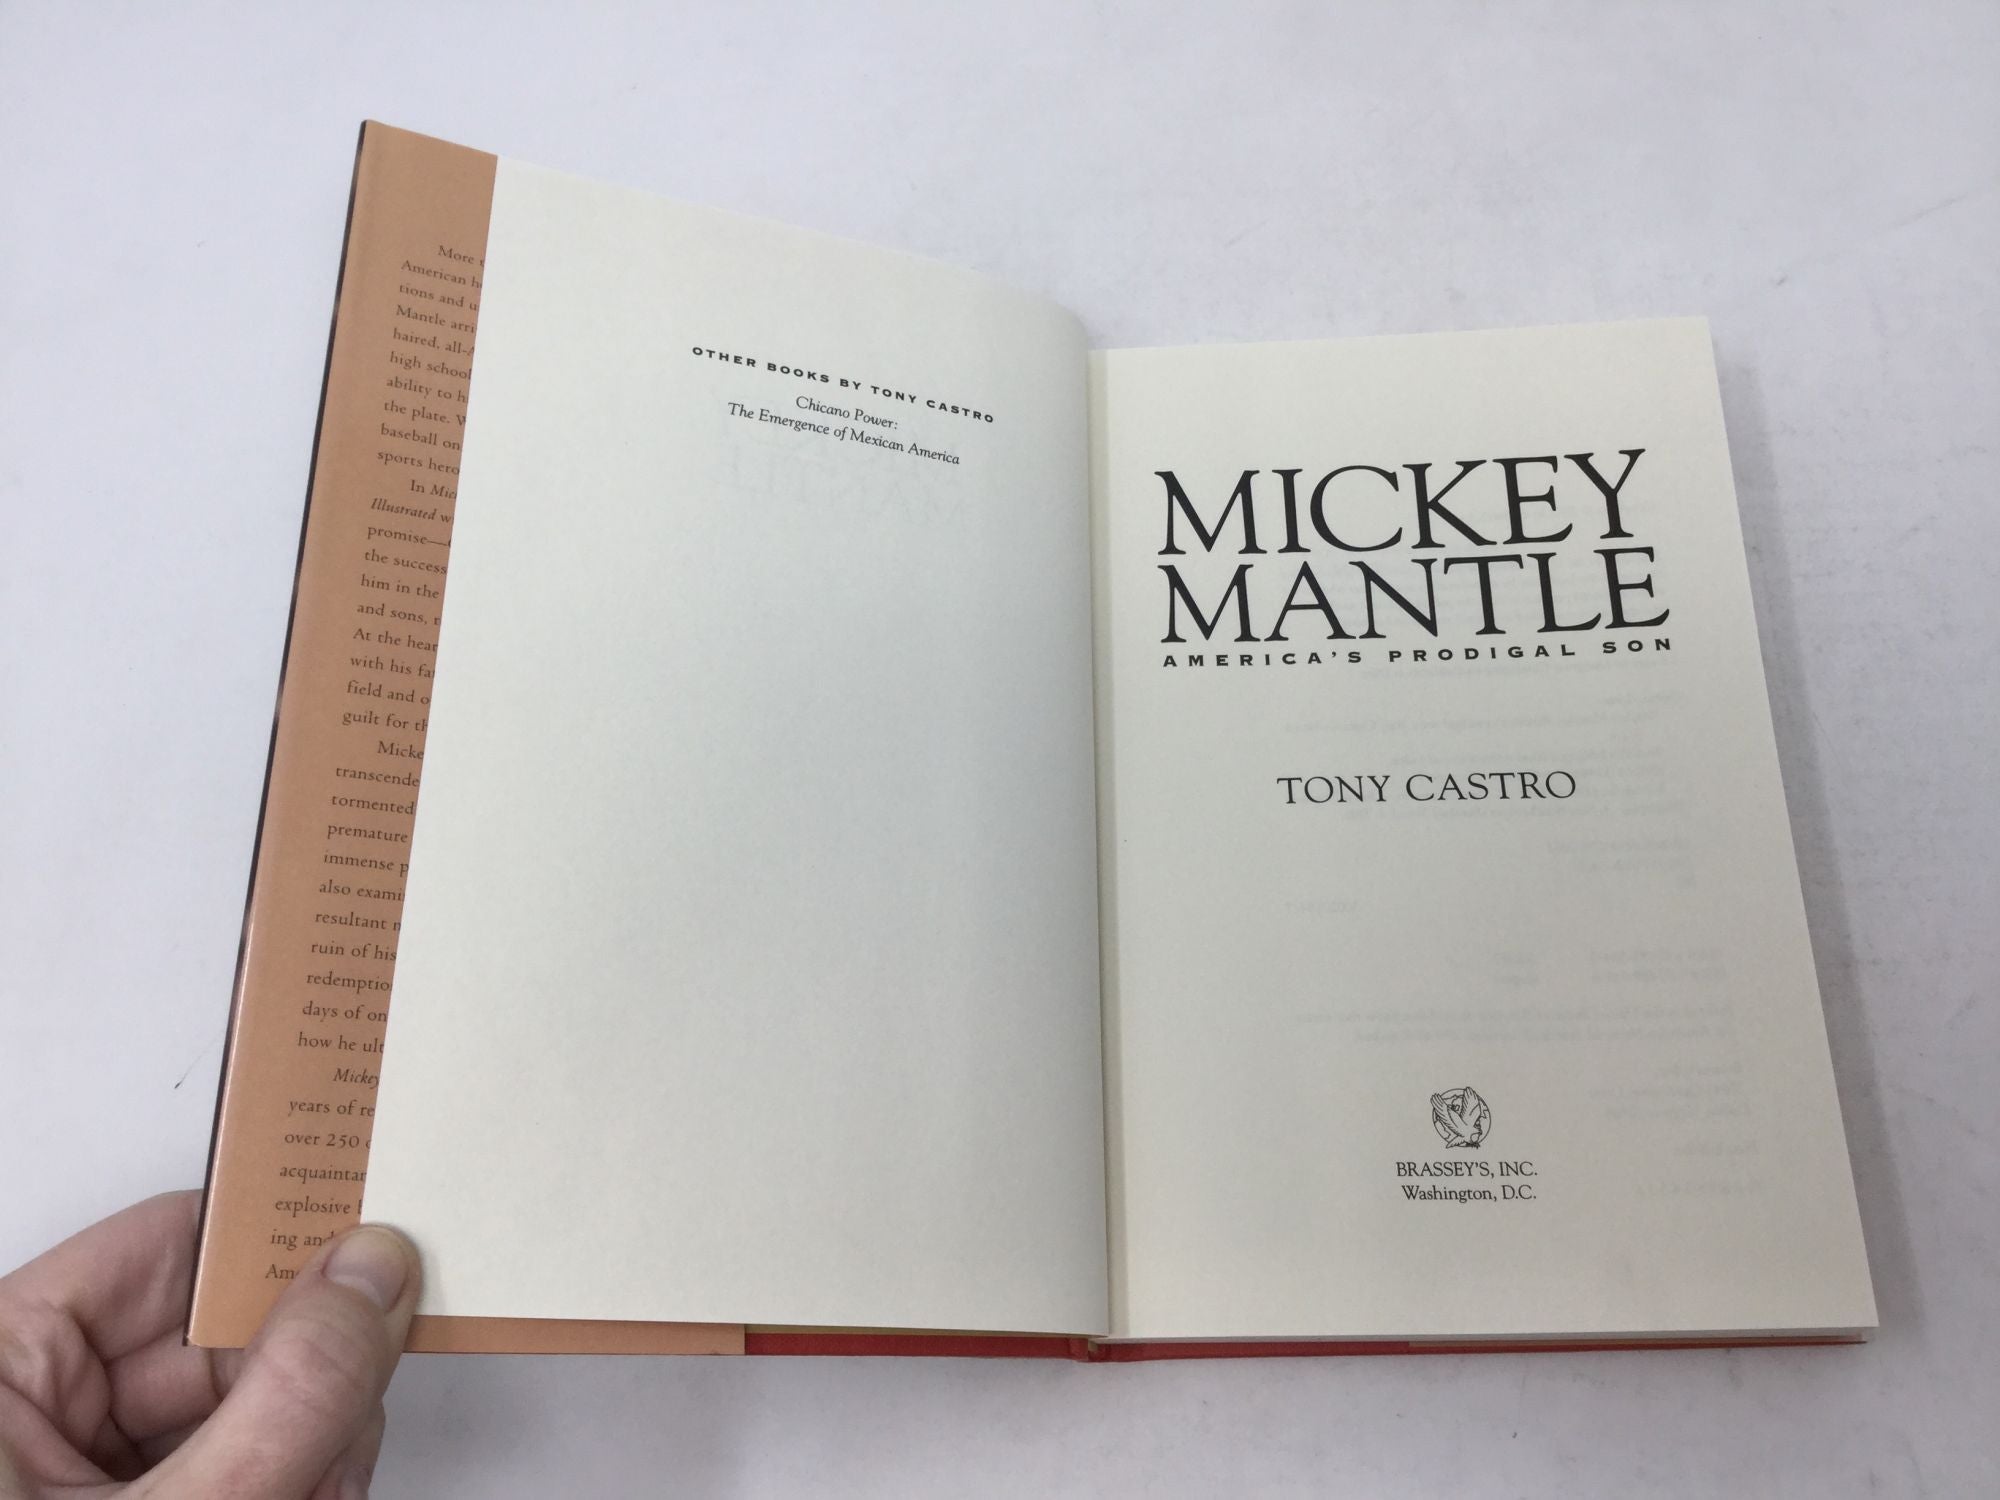 Tony Castro's America: Mickey Mantle